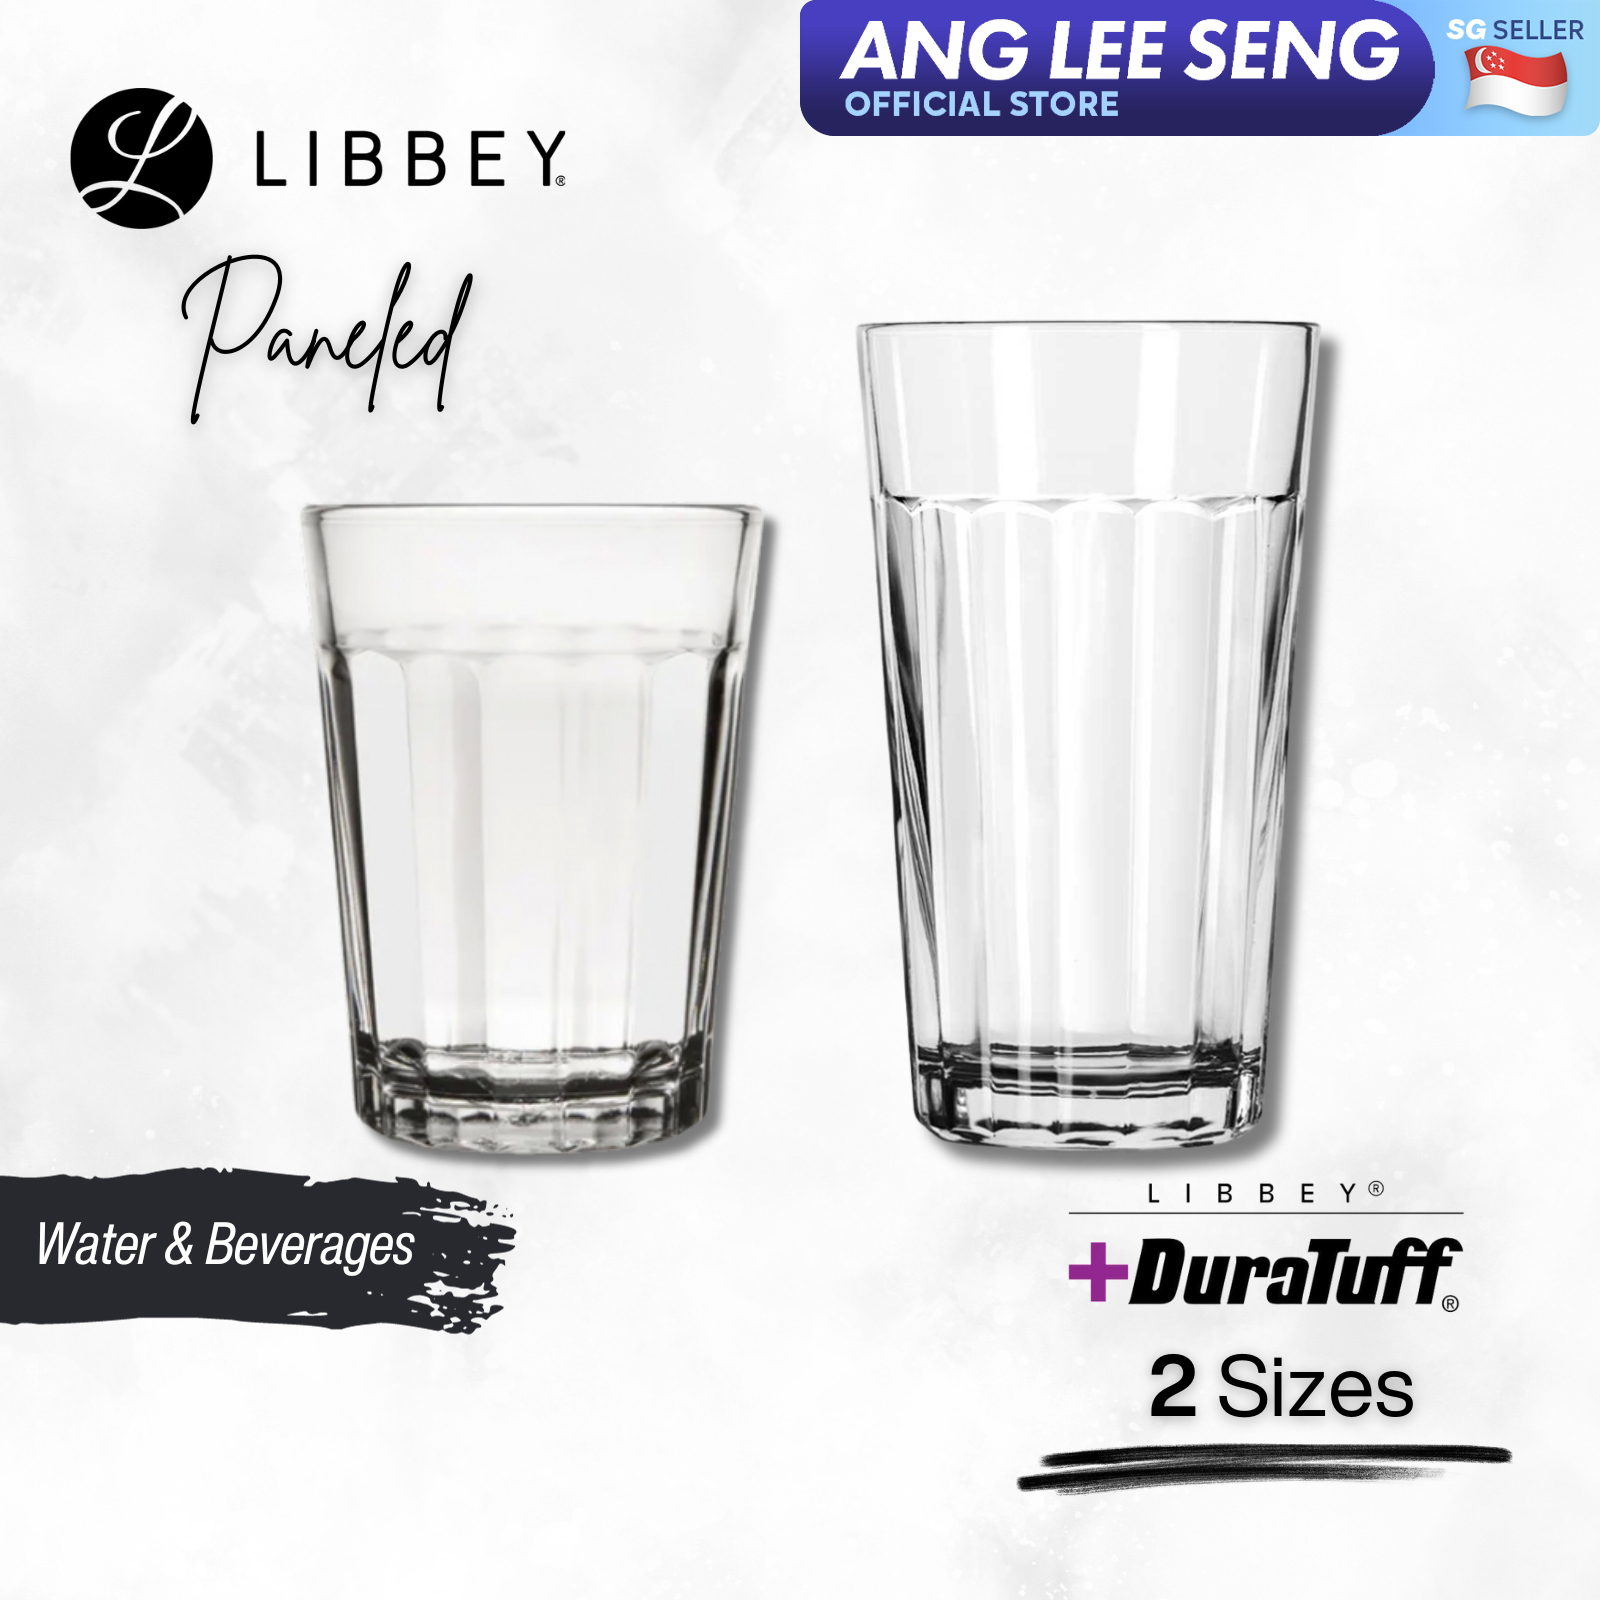 Libbey Paneled DuraTuff Glass Tumbler - Extra Tough Shatter & Heat Resistant - 2 Sizes, 2-pc Set